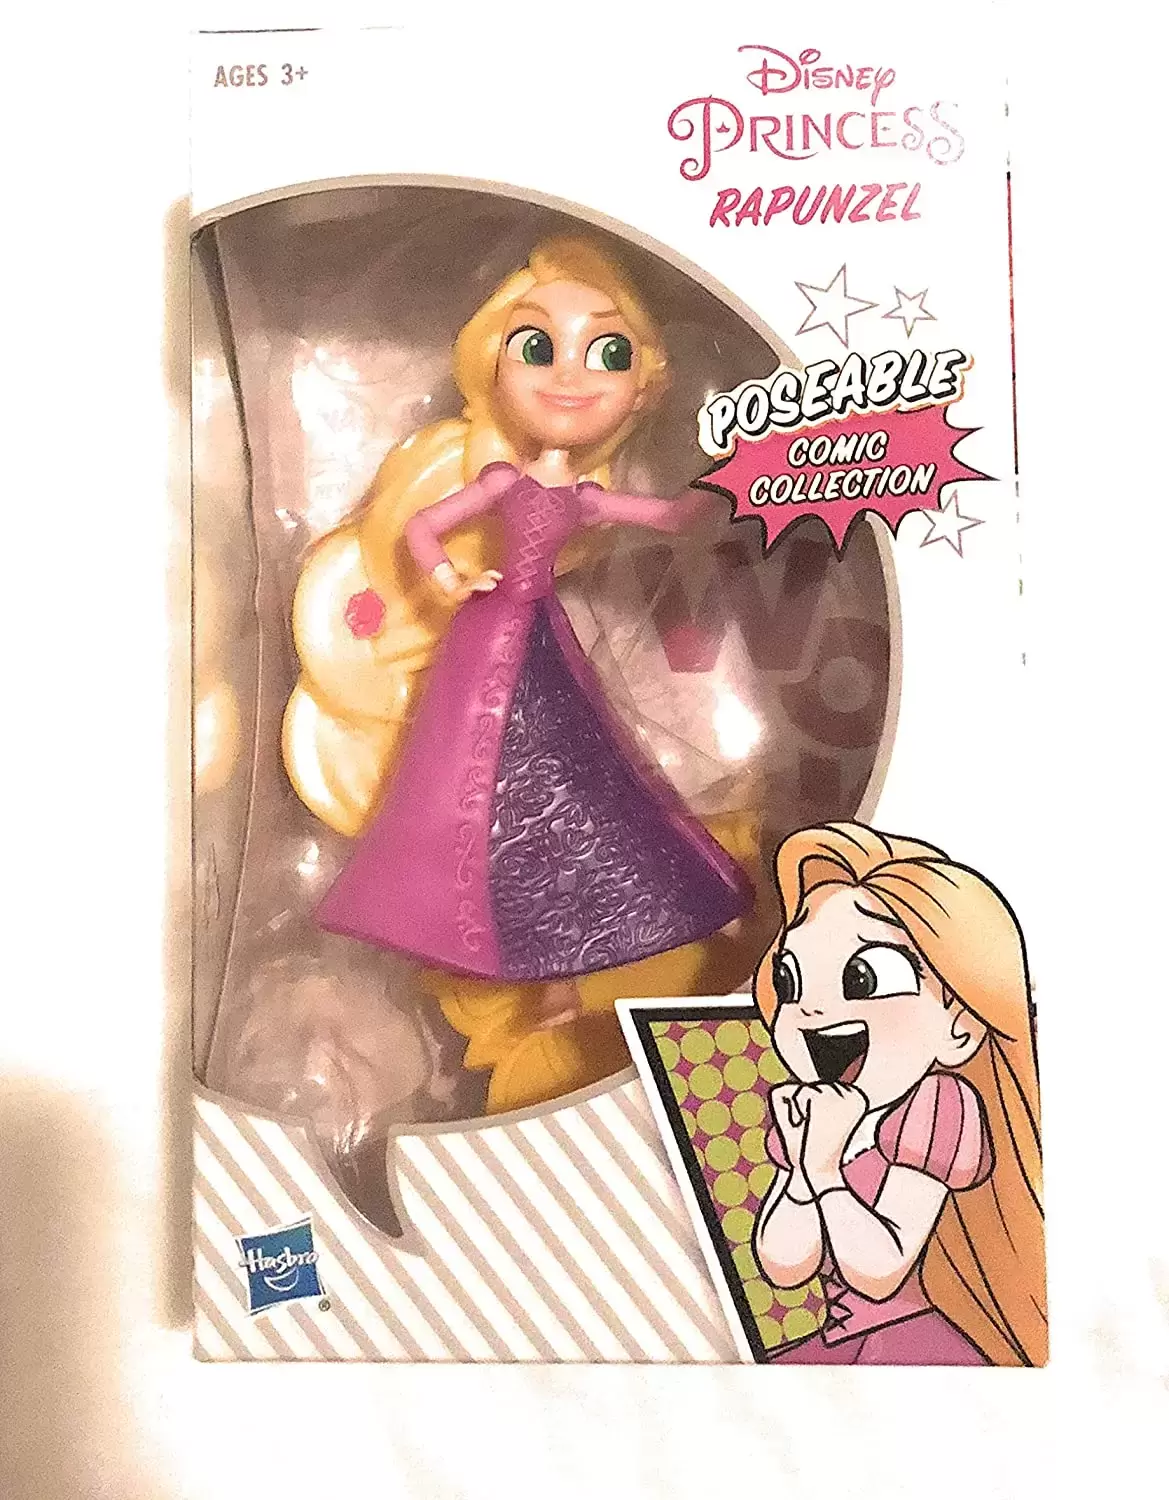 Disney Princess Poseable Comic Collection - Rapunzel